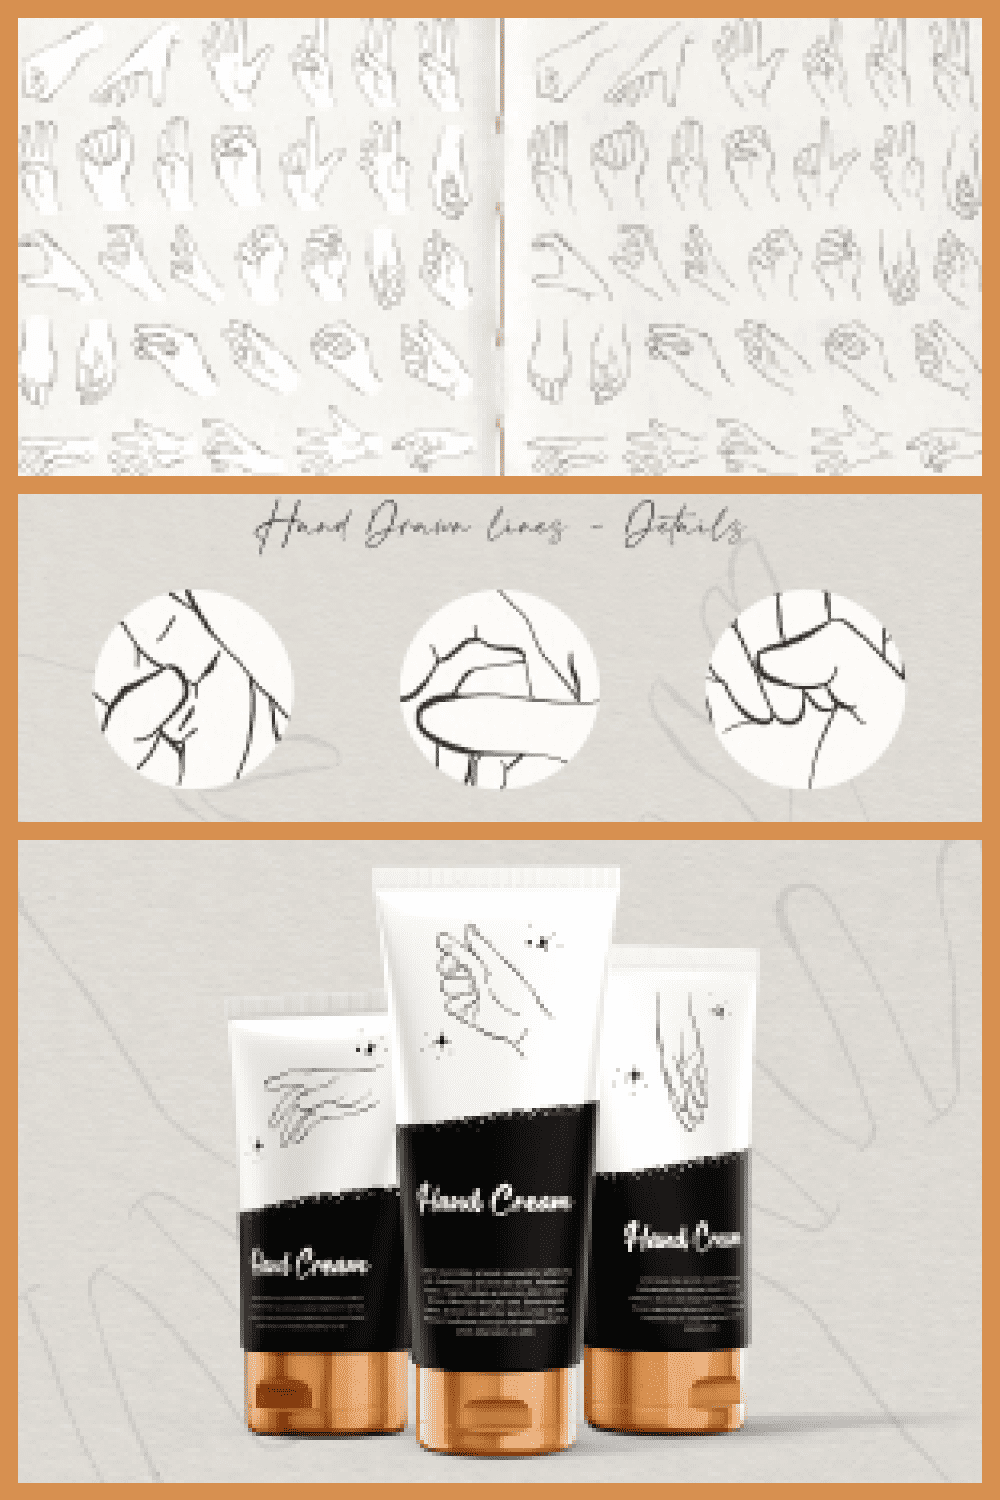 Hand Drawn Hand Gestures Vector Illustrations - MasterBundles - Pinterest Collage Image.